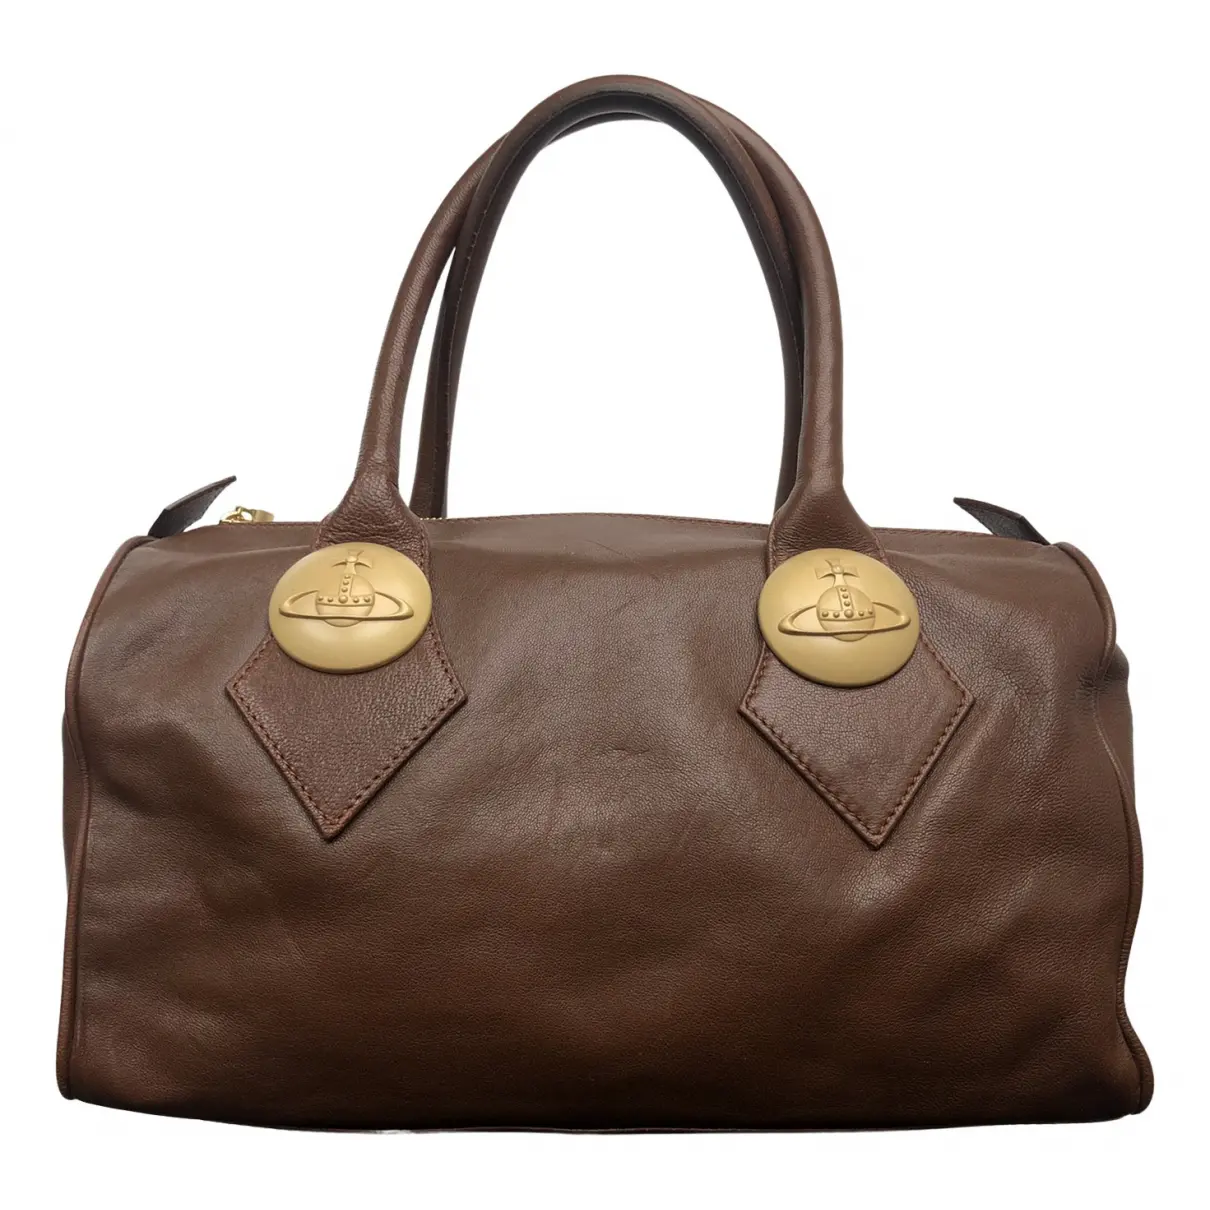 Derby leather handbag Vivienne Westwood